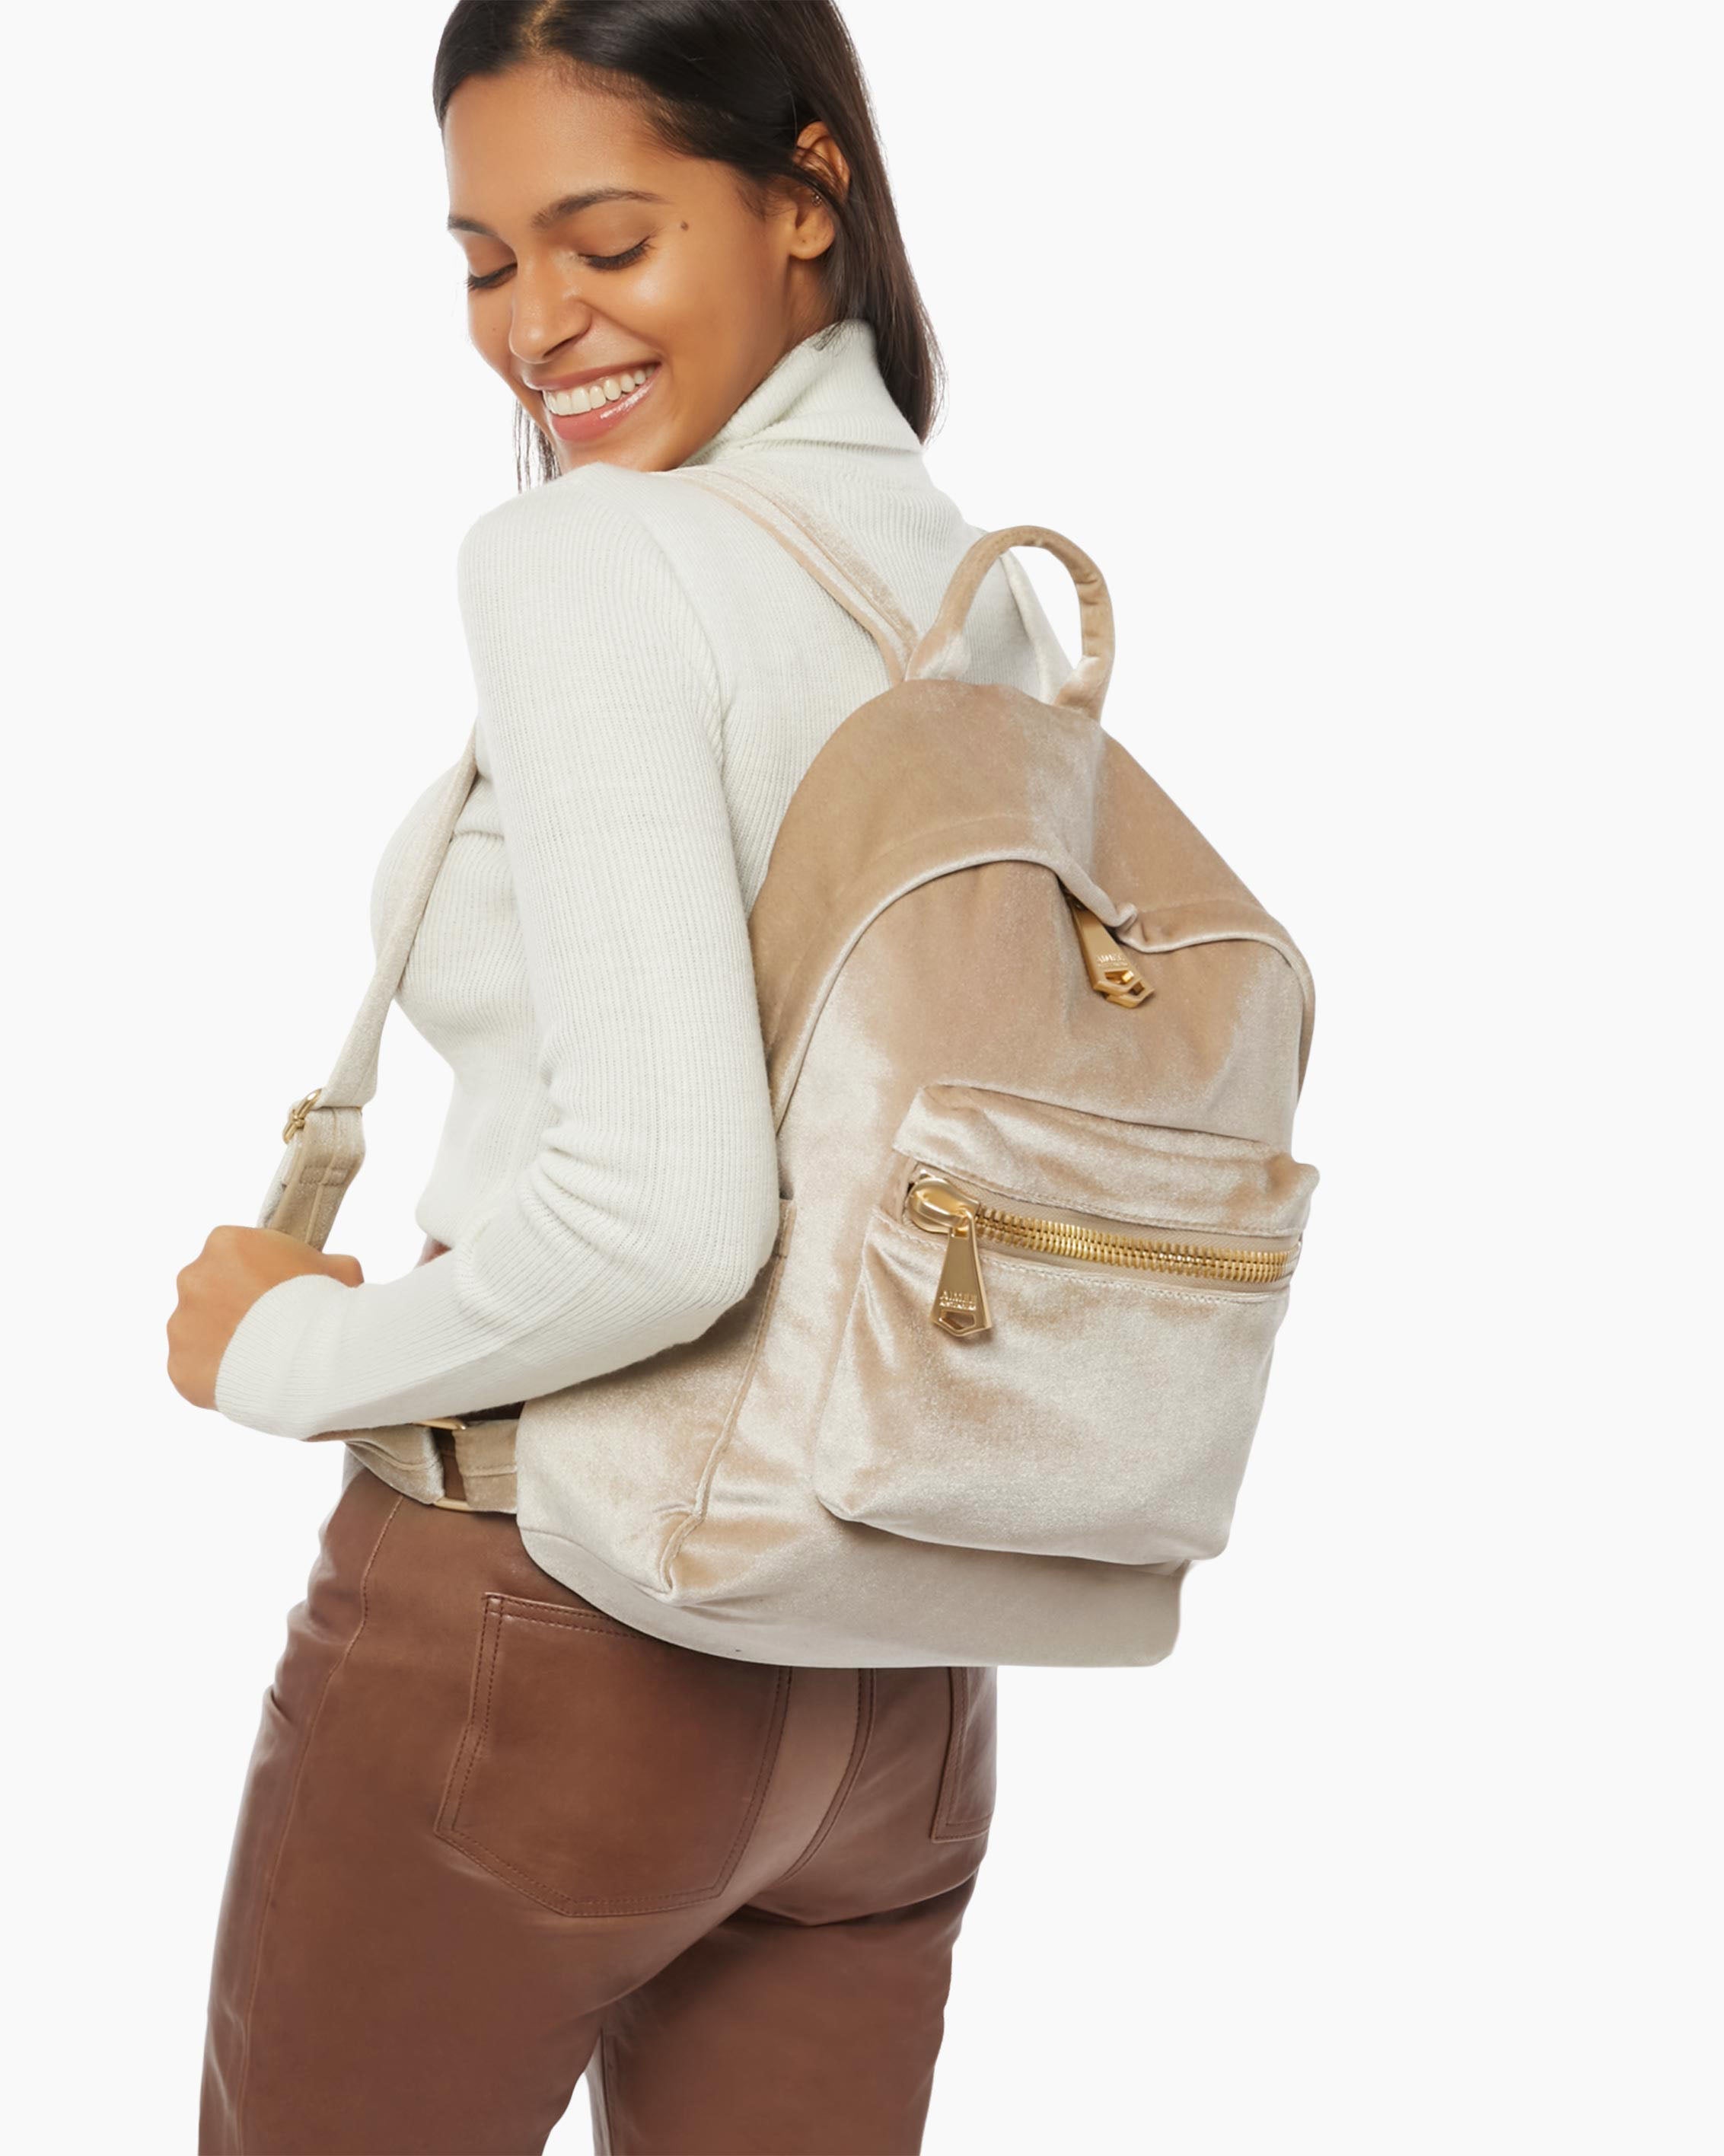 Buy Gray-brown CONVERTIBLE Backpack, Leather BACKPACK PURSE, Shoulder Bag,  Distressed Leather Hobo Bag, Crossbody Leather Handbag, School Bag Online  in India - Etsy